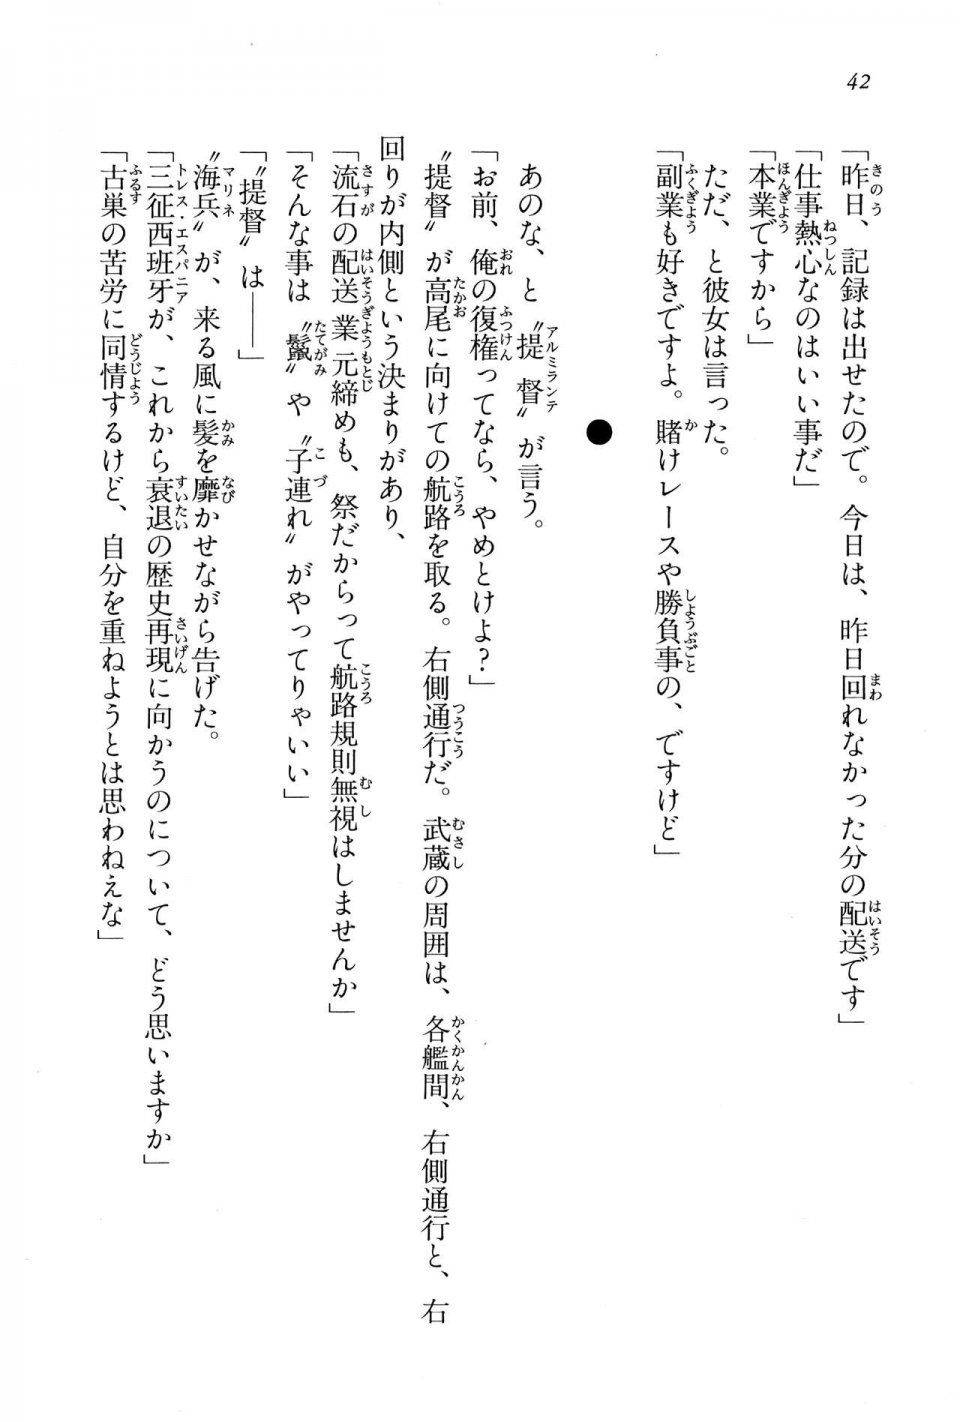 Kyoukai Senjou no Horizon BD Special Mininovel Vol 6(3B) - Photo #46